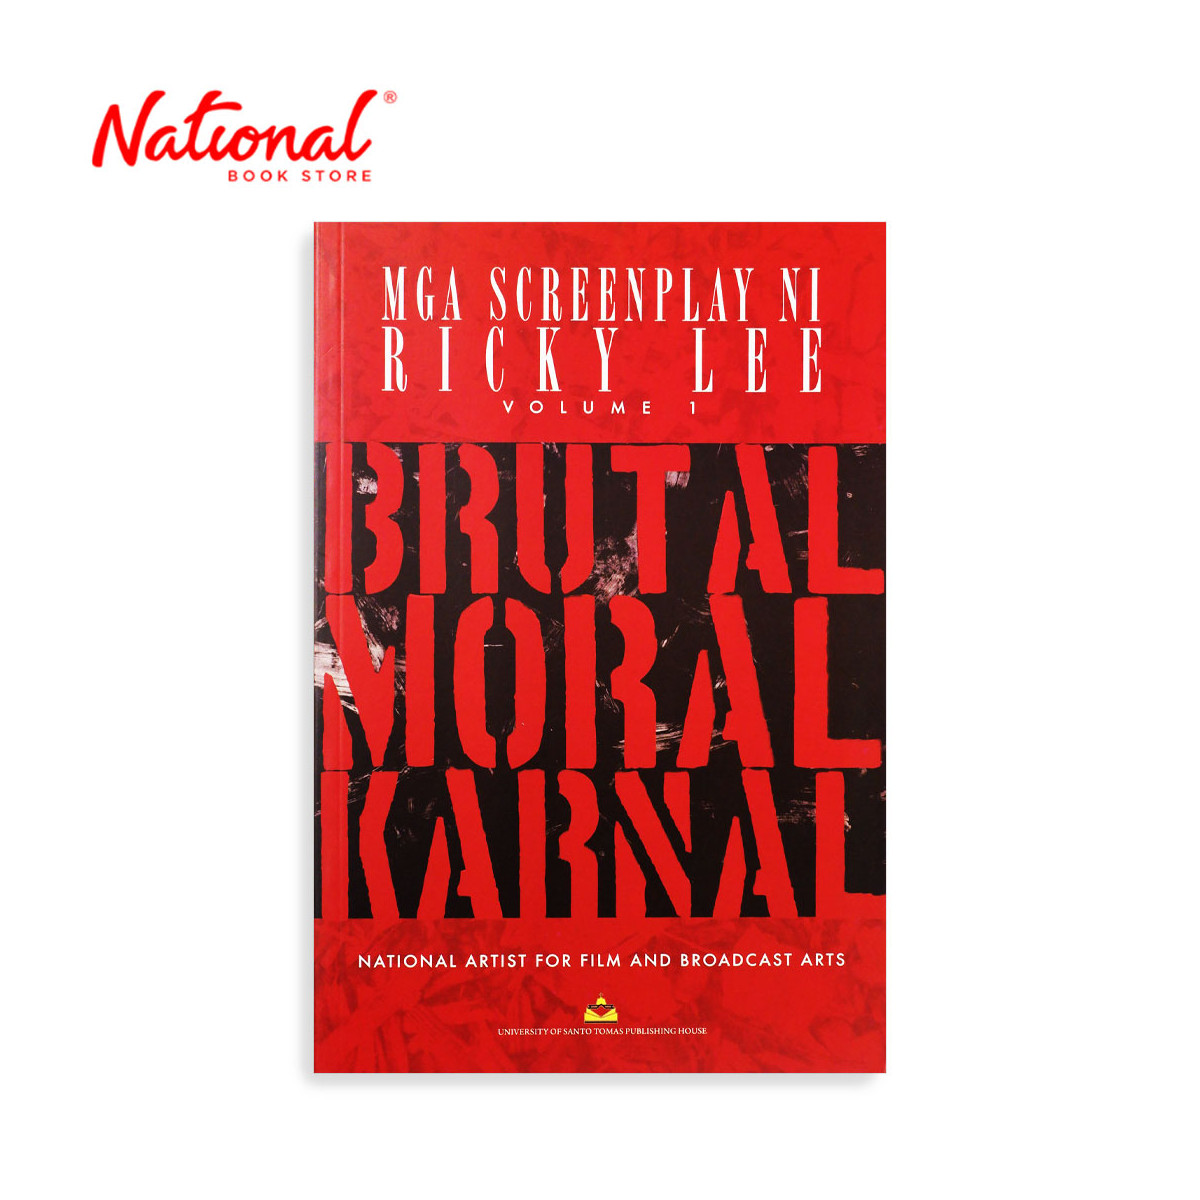 Mga Screenplay Ni Ricky Lee Volume 1: Brutal, Moral, Karnal by Ricky Lee - Trade Paperback